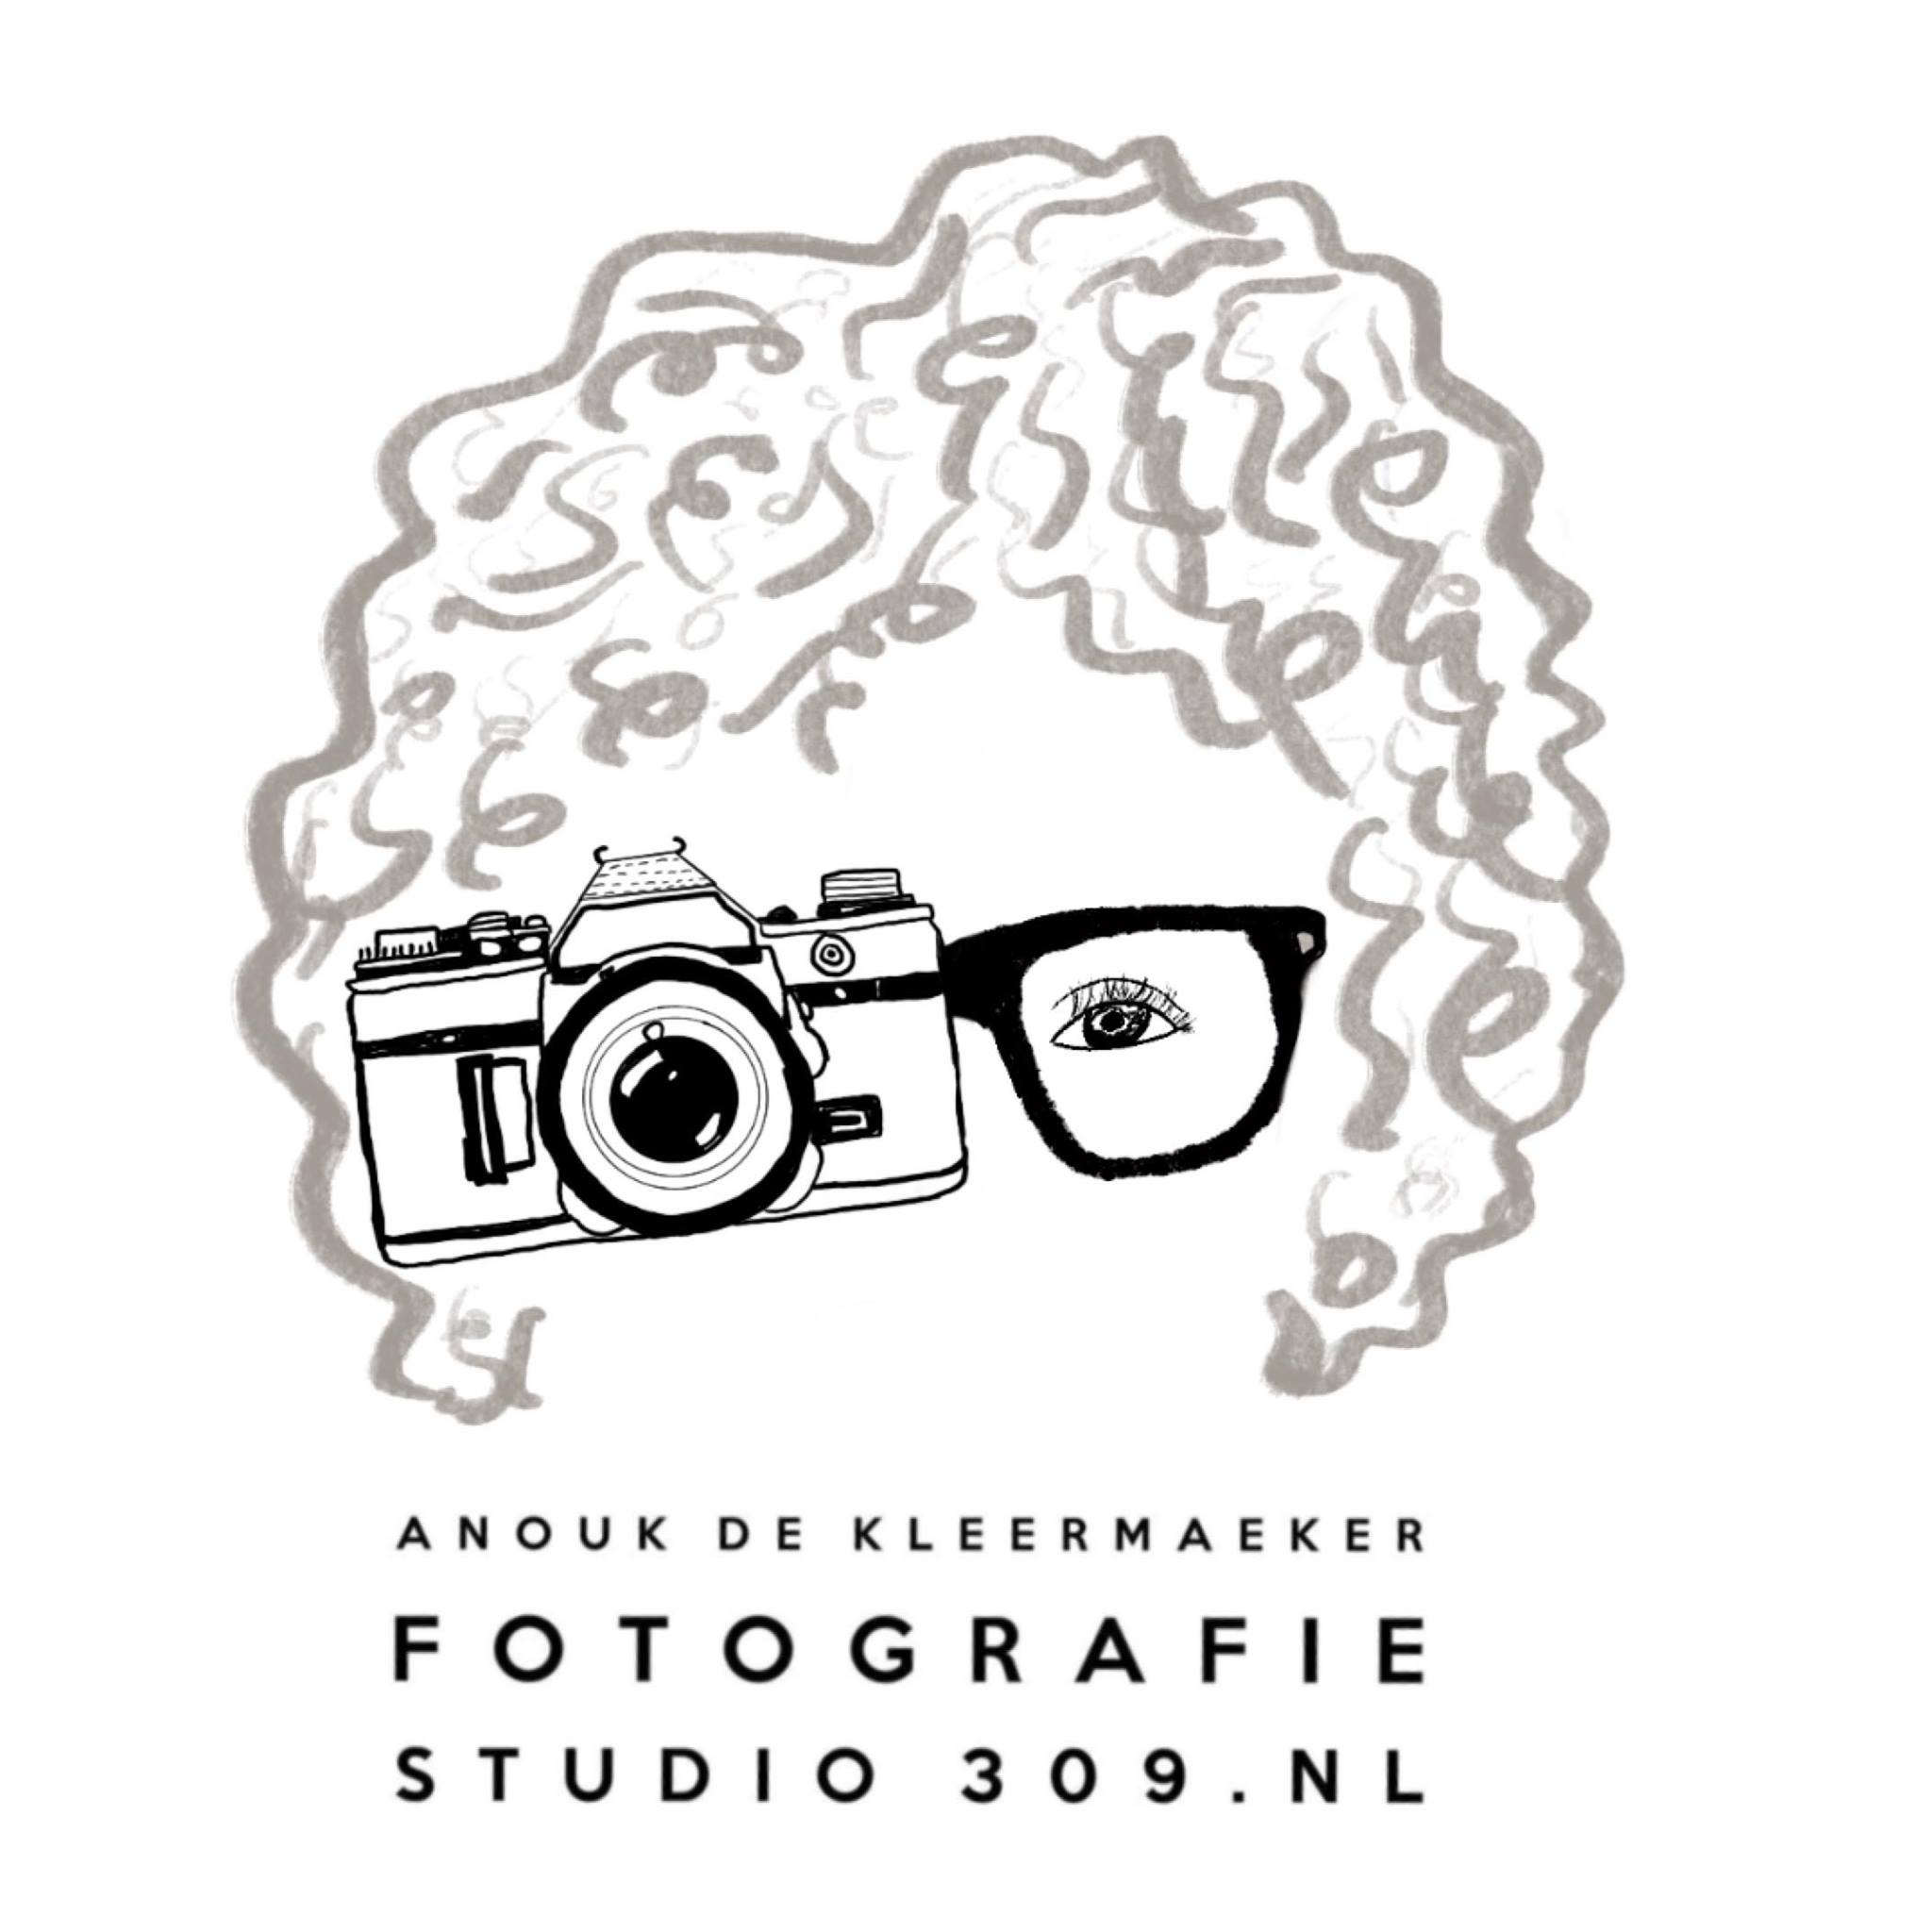 Studio 309.nl